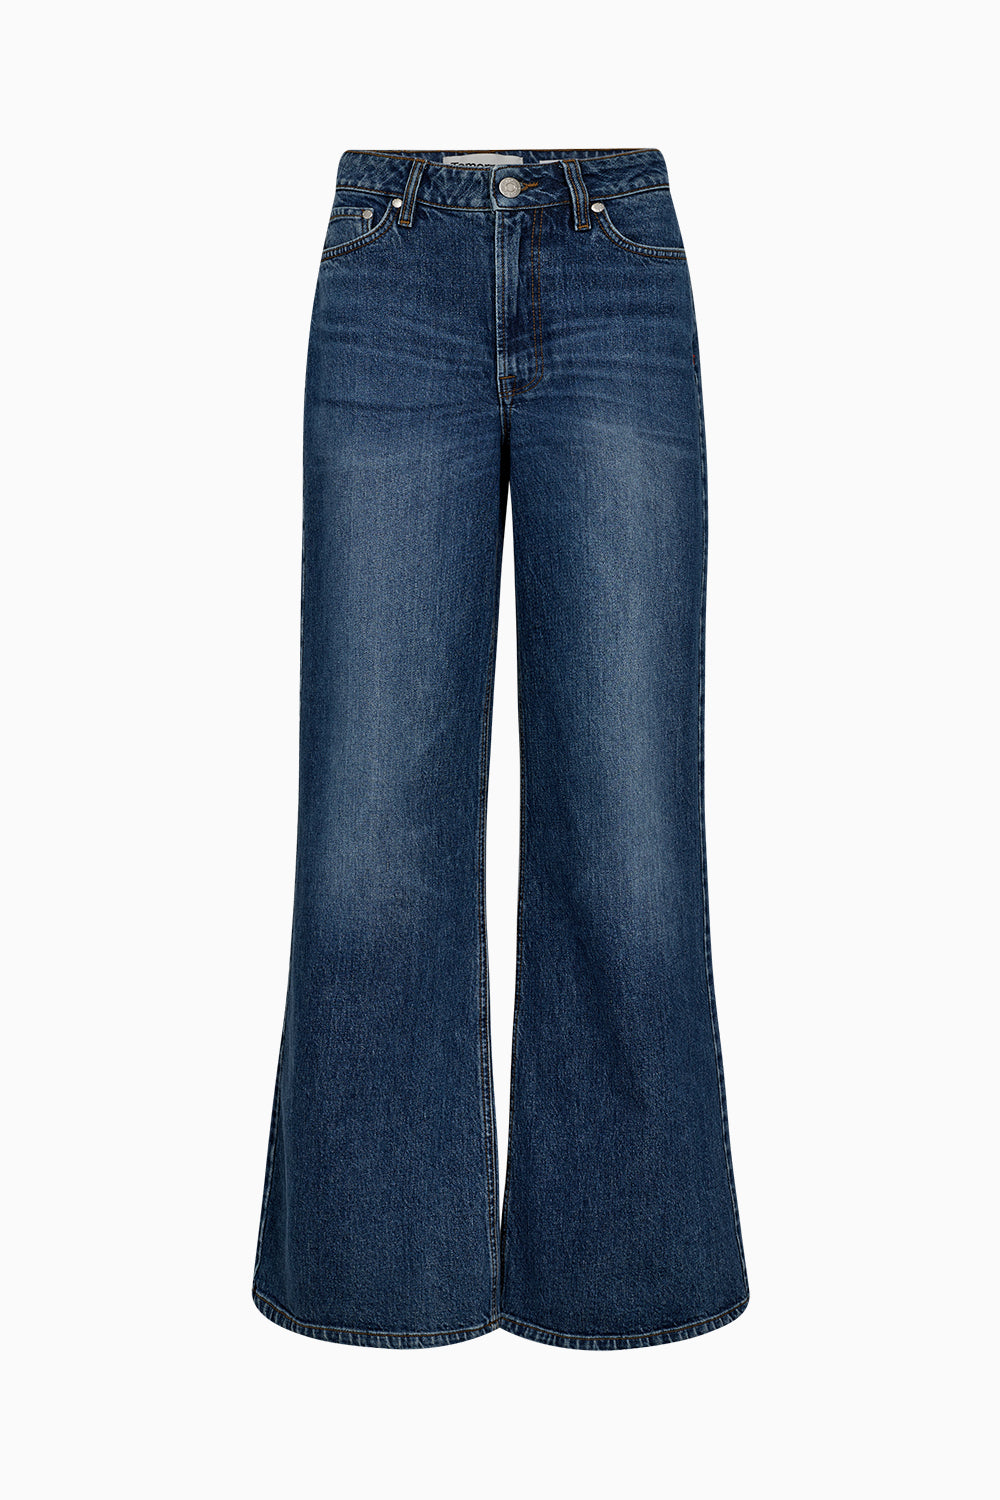 Tomorrow TRW-Arizona Jeans Wash Woodland Jeans & Pants